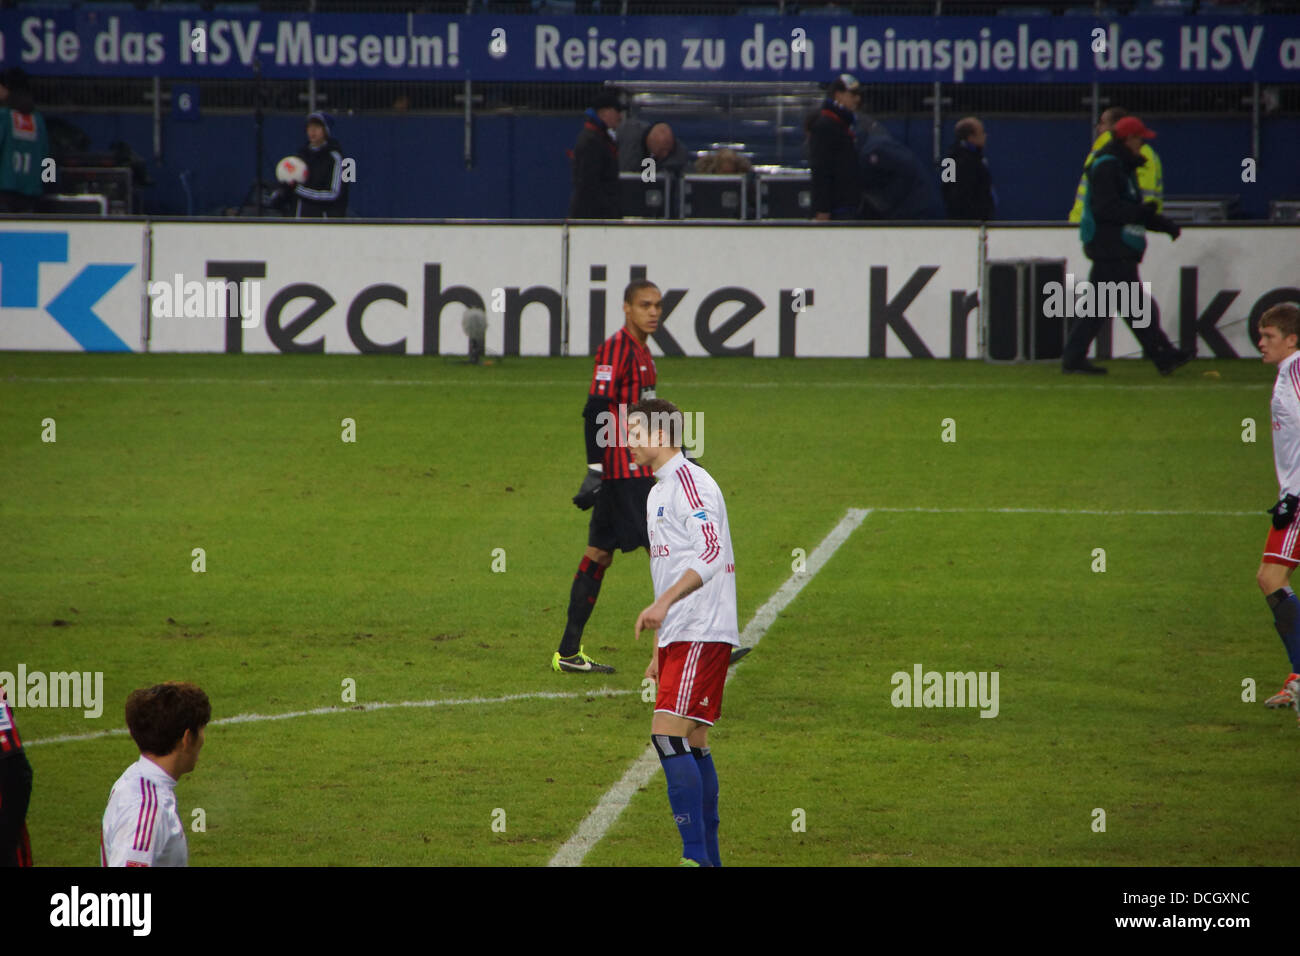 The football player Marcell Jansen from the team Hamburger Sportverein HSV Hamburg Stock Photo